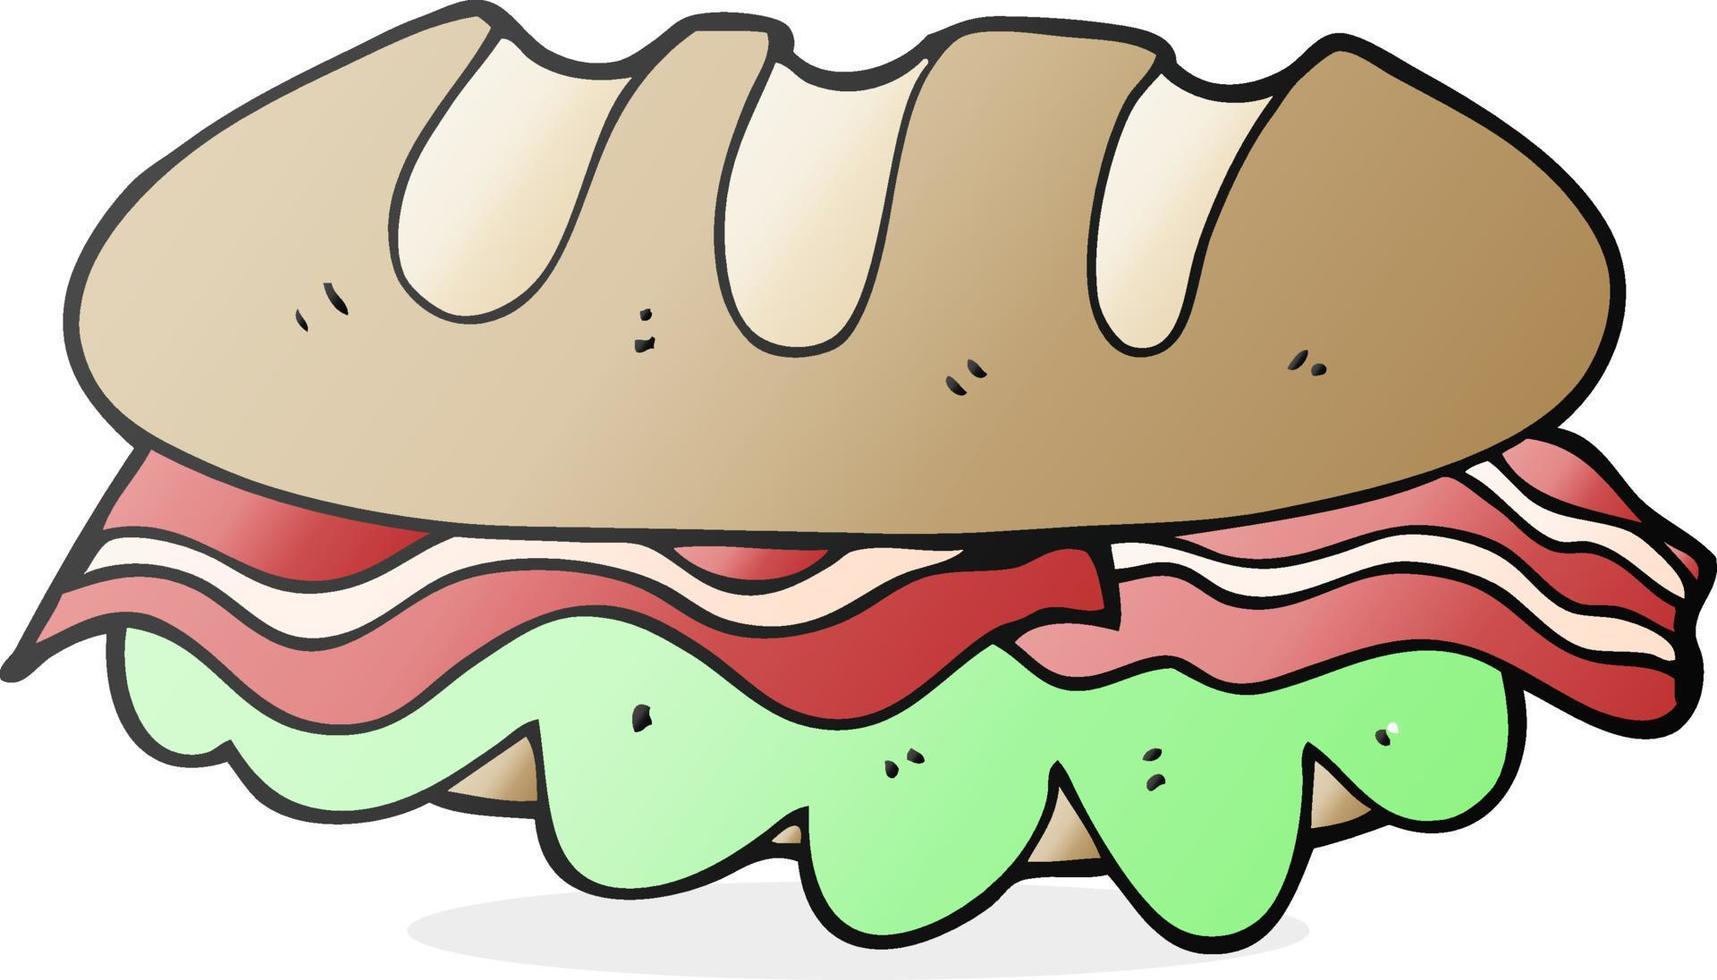 Cartoon riesiges Sandwich vektor